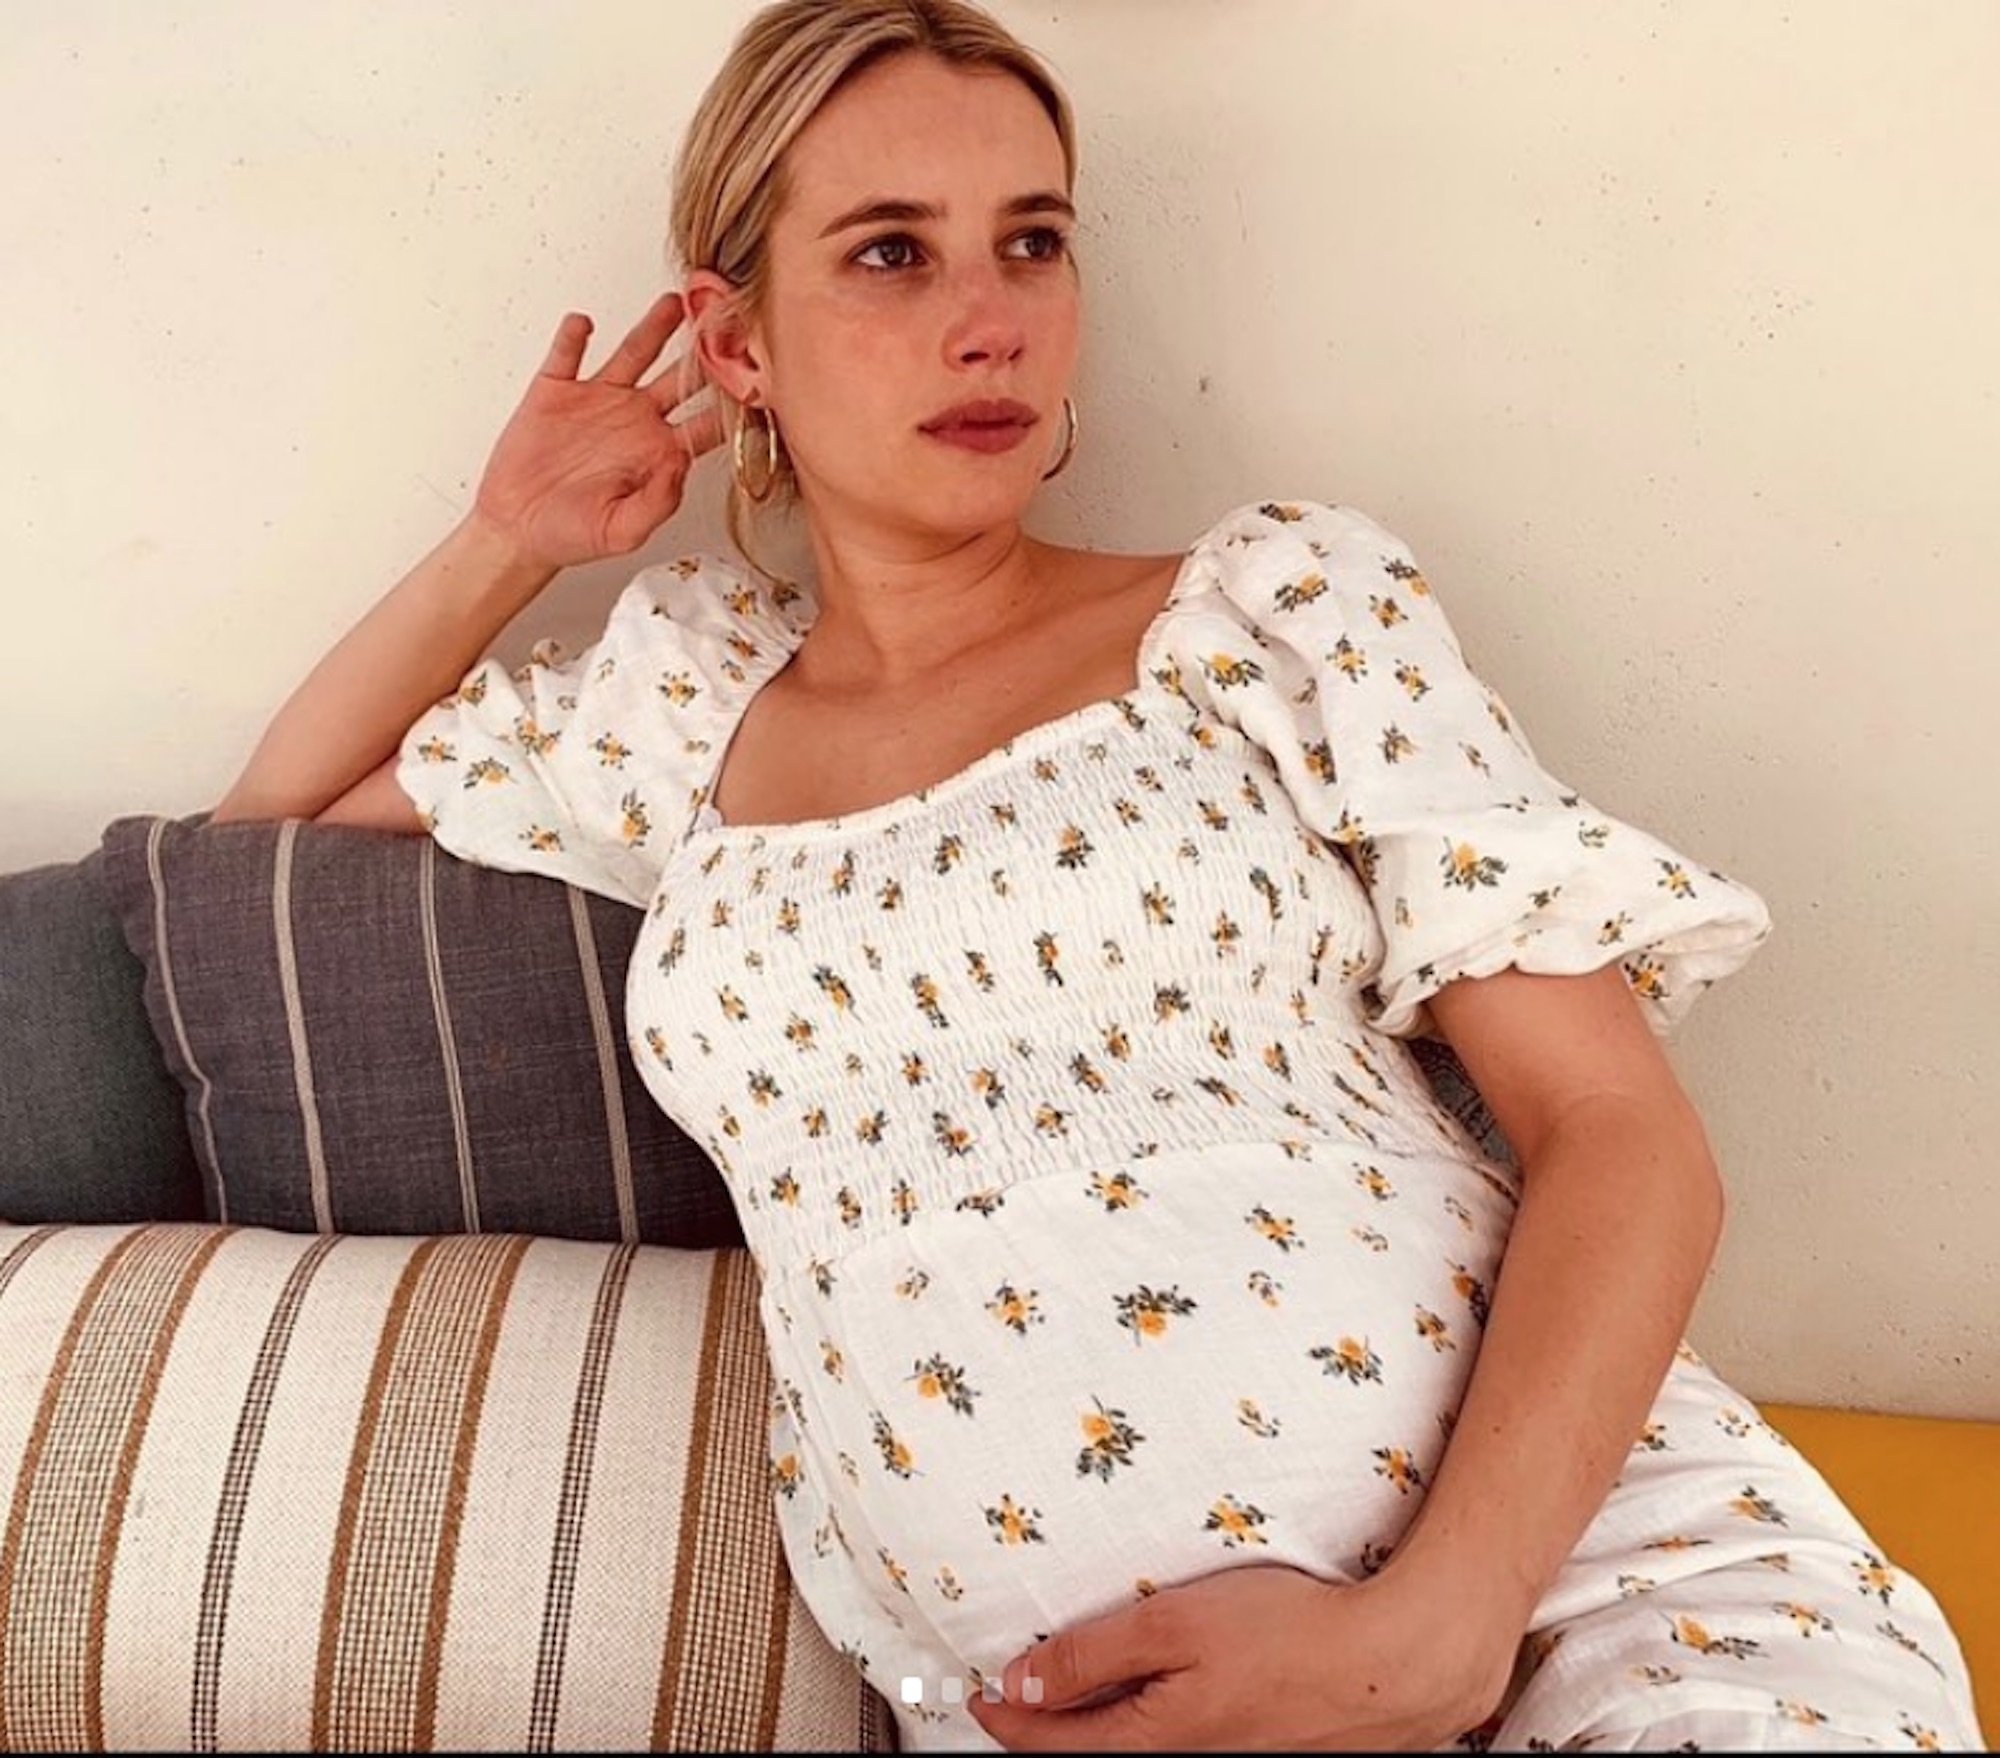 Celebrity Emma - Emma Roberts Baby Bump Photos: See the Pregnant Actress!